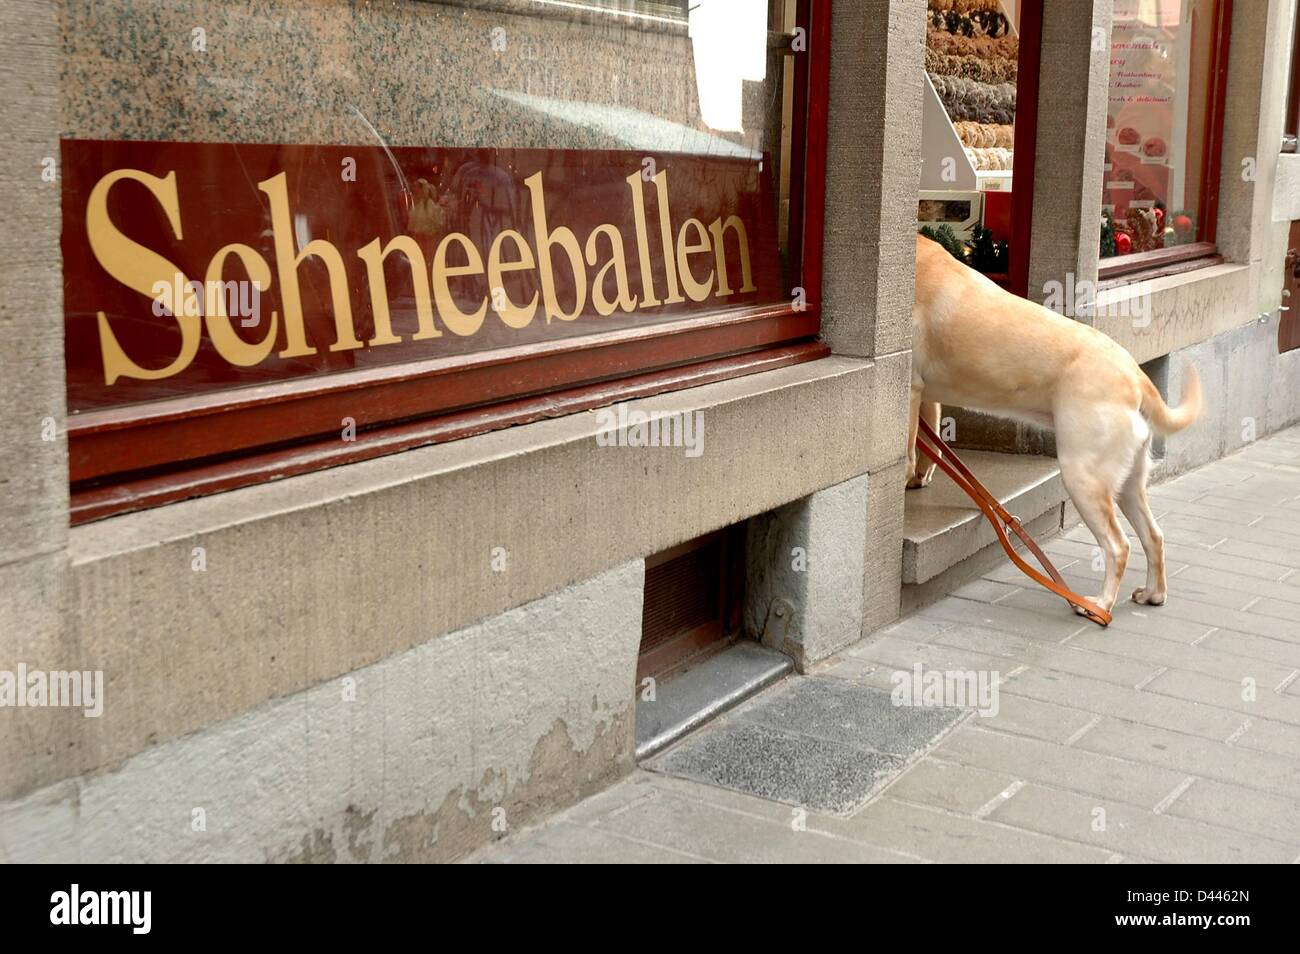 A dog glimpses into a bakery that offers the traditional baked goods Schneeballen (Snow balls) in Rothenburg ob der Tauber, Germany, 15 December 2007. Fotoarchiv für Zeitgeschichte - Steinach Stock Photo